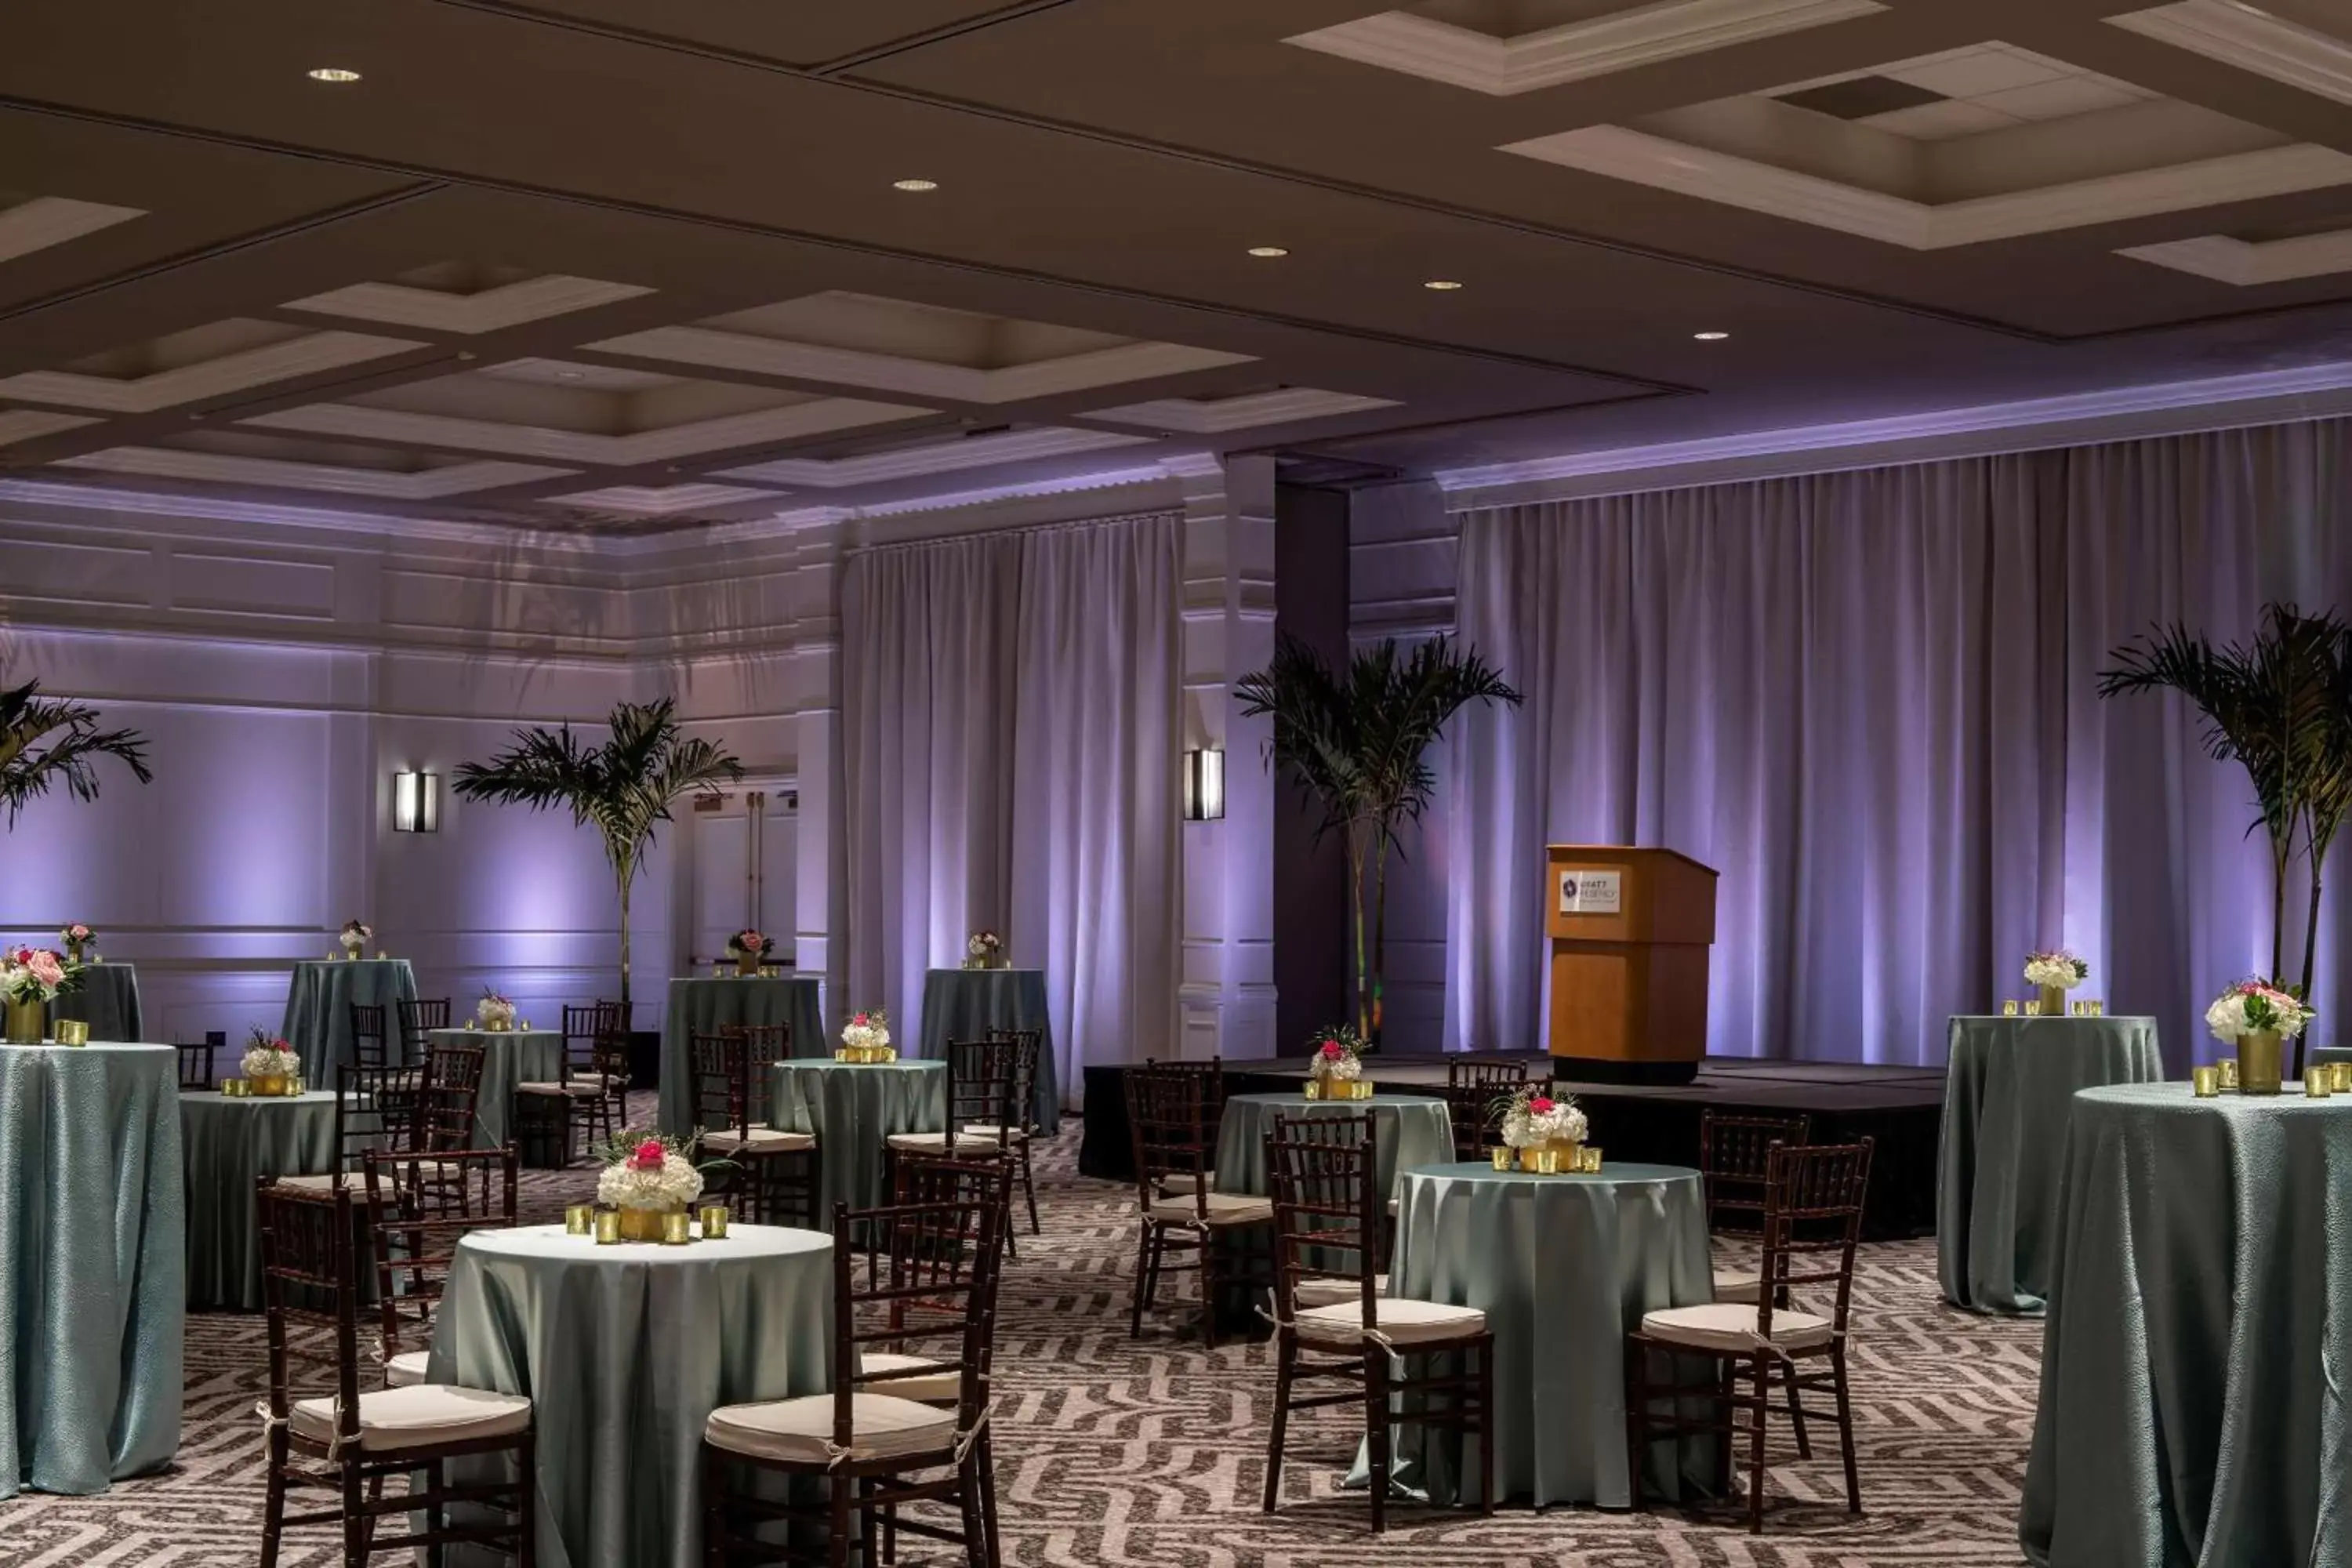 Banquet/Function facilities, Restaurant/Places to Eat in Hyatt Regency Orlando International Airport Hotel